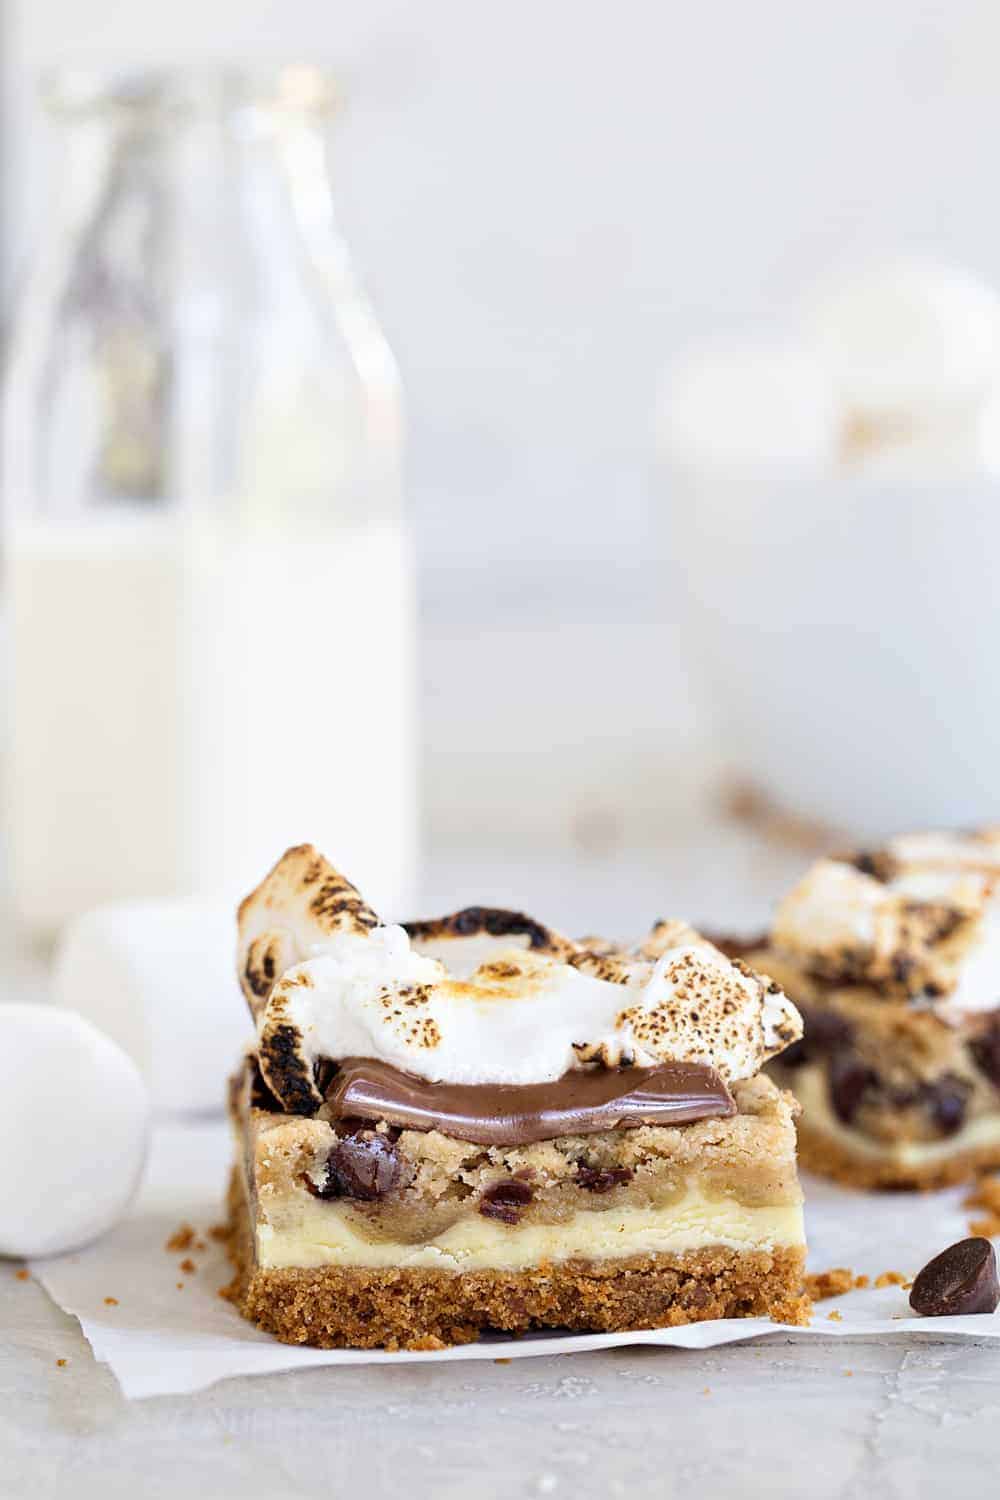 Cookie Dough Cheesecake S'mores combine three classics into one epic dessert!